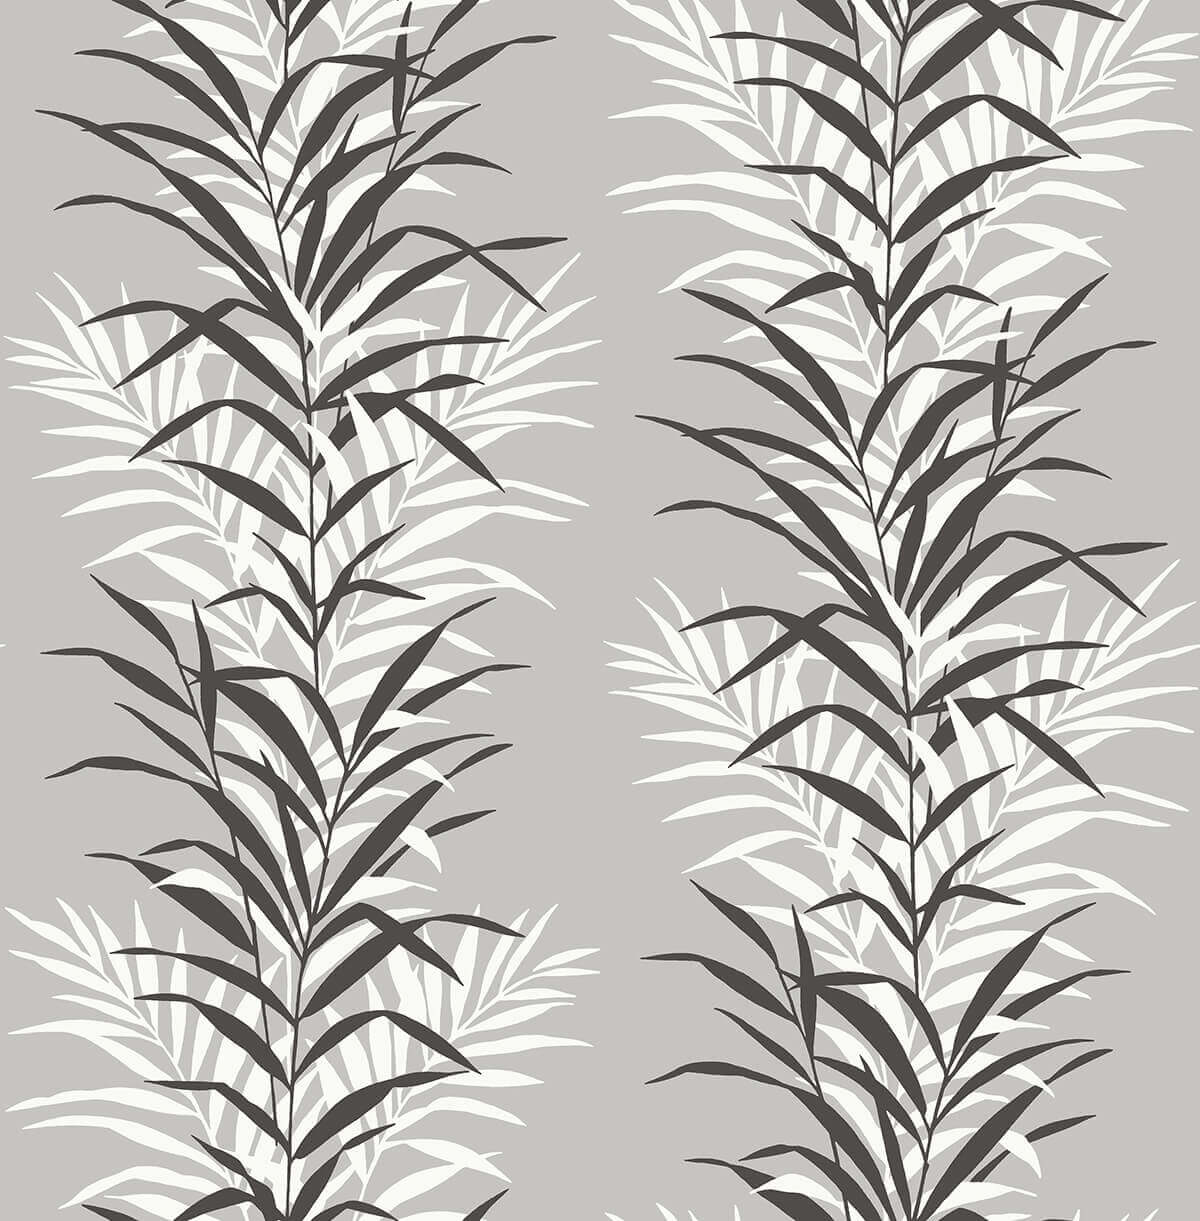 NextWall Leaf Peel and Stick Wallpaper - SAMPLE